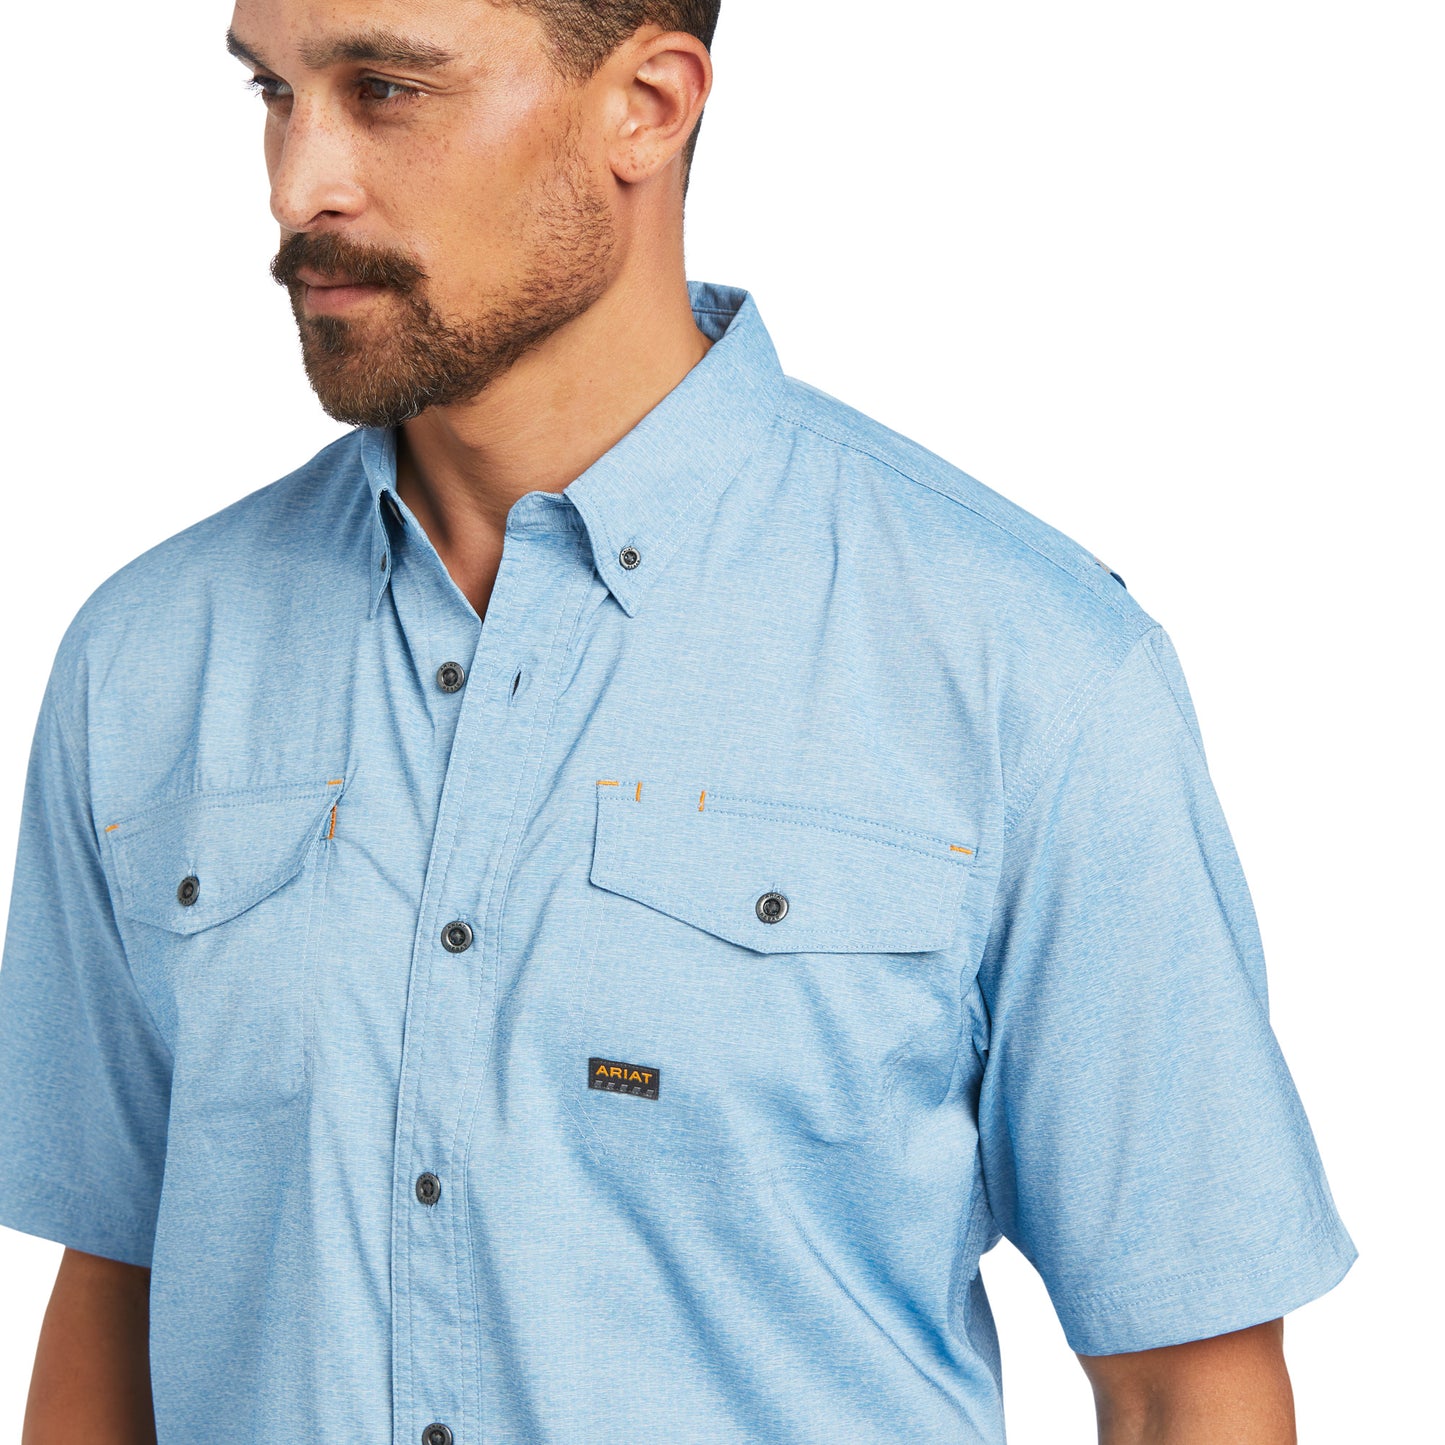 Ariat® Men's Rebar Made Tough Blue DuraStretch Work Shirt 10039325